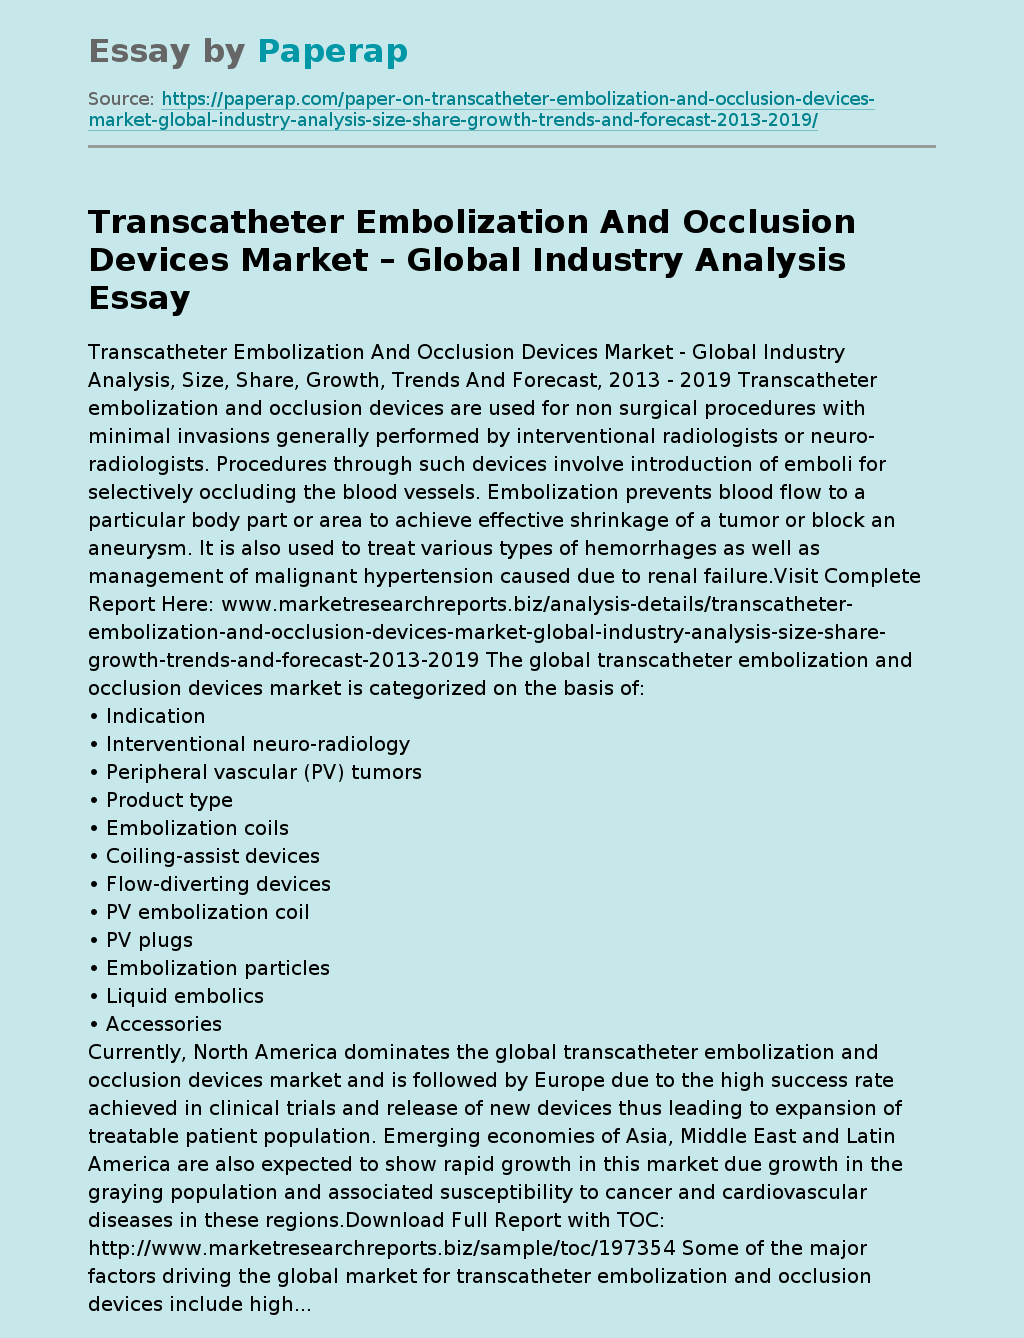 Transcatheter Devices Market Analysis